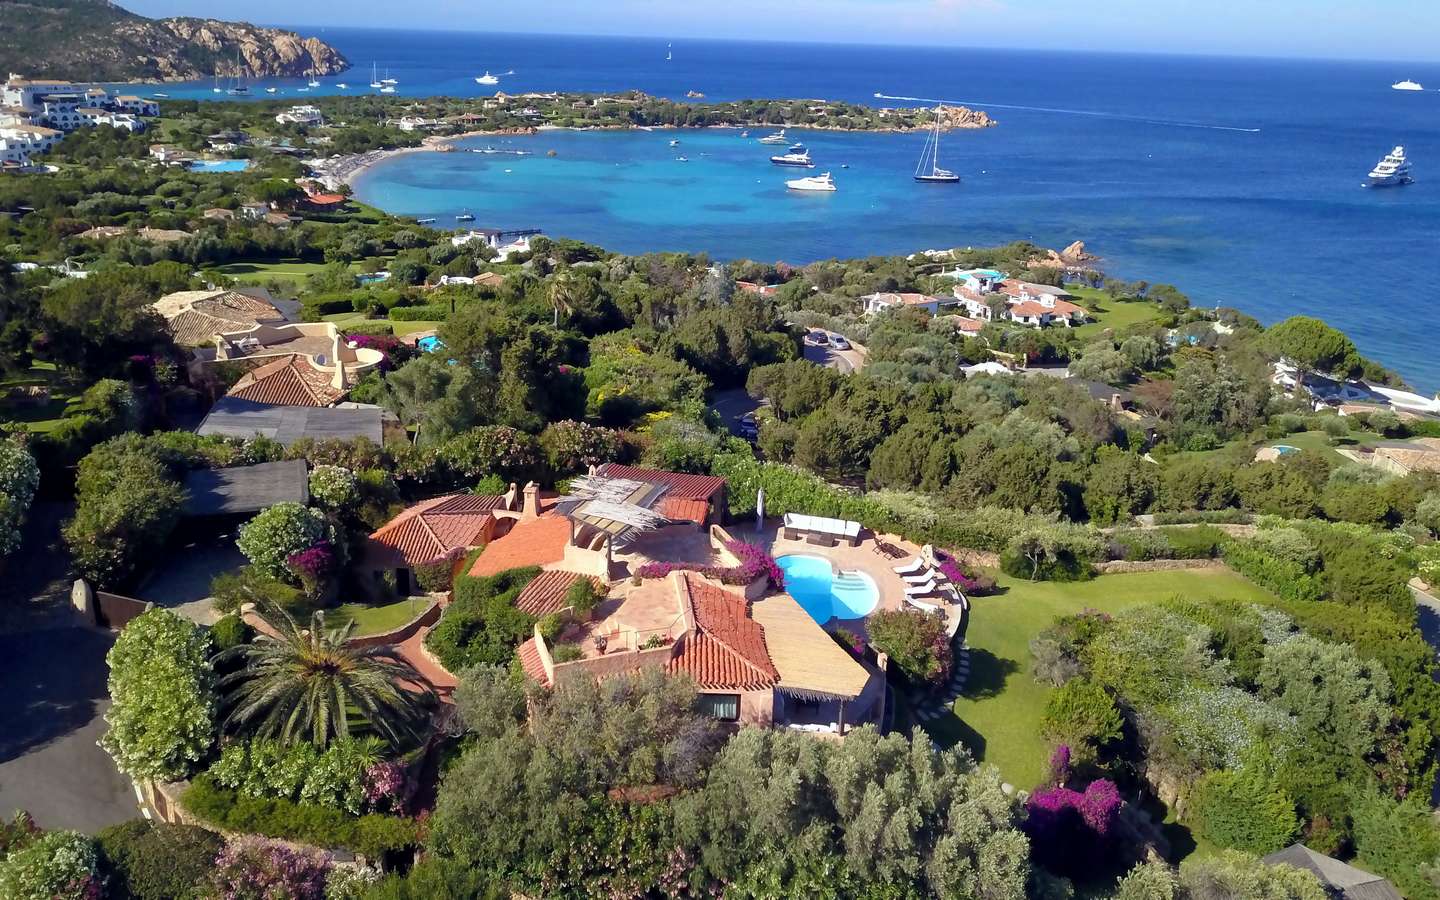 Top Properties in Sardinia, Houses, & Apartments For Sale - Sardinia, Italy